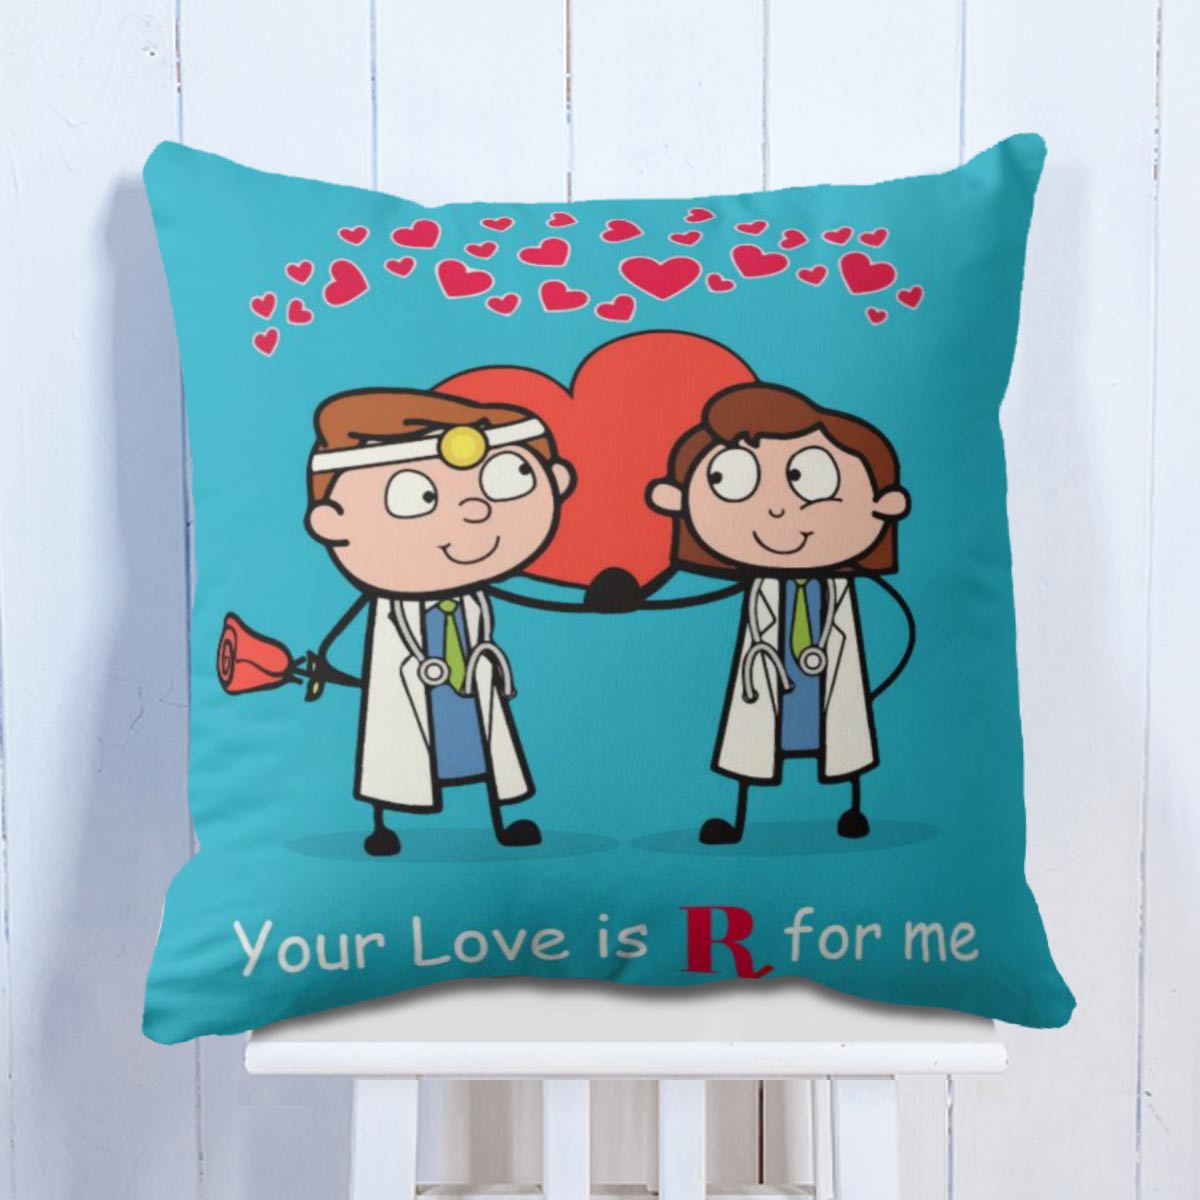 Your Love Cushion